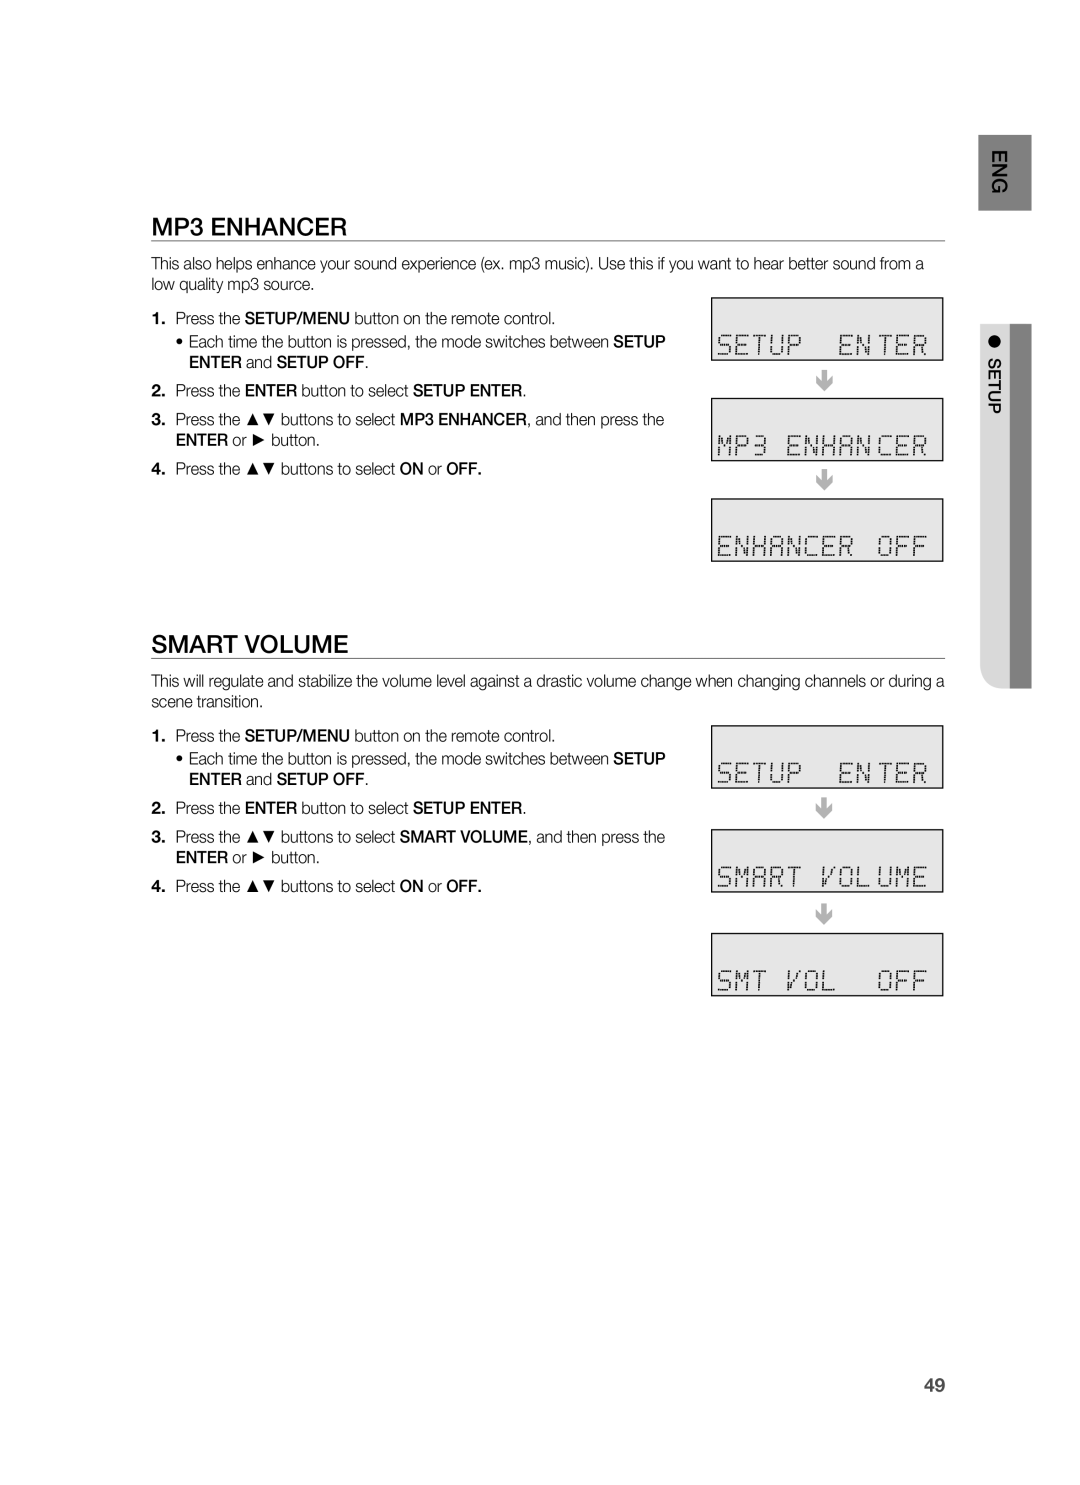 Samsung HW-C900-XAA user manual MP3 ENHANCER, Smart Volume 